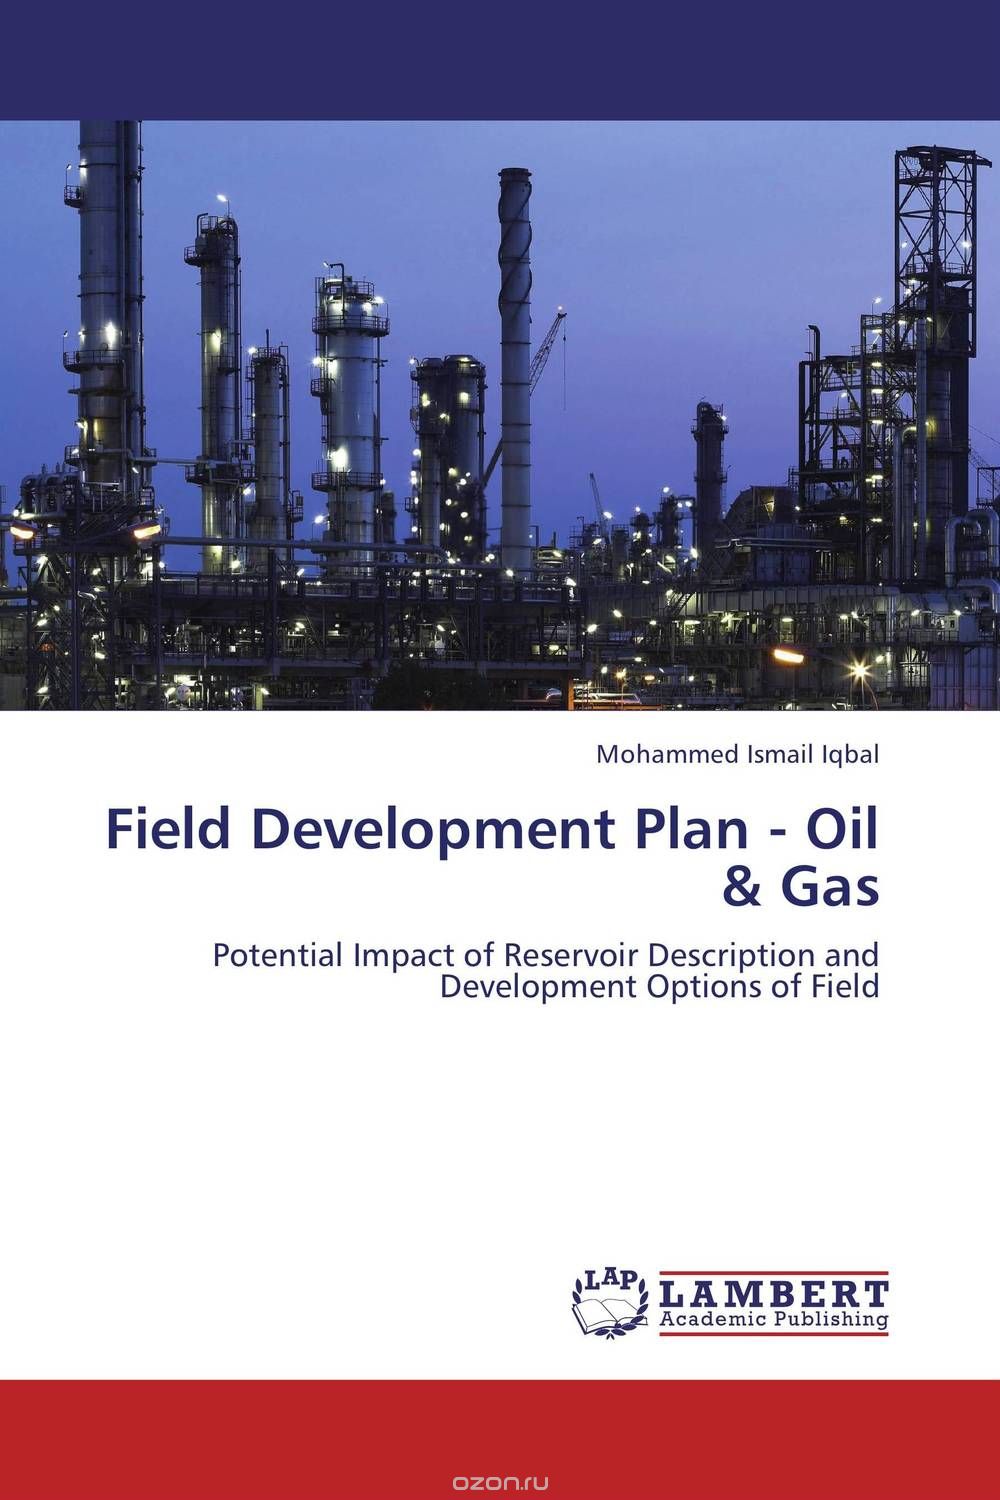 Скачать книгу "Field Development Plan - Oil & Gas"